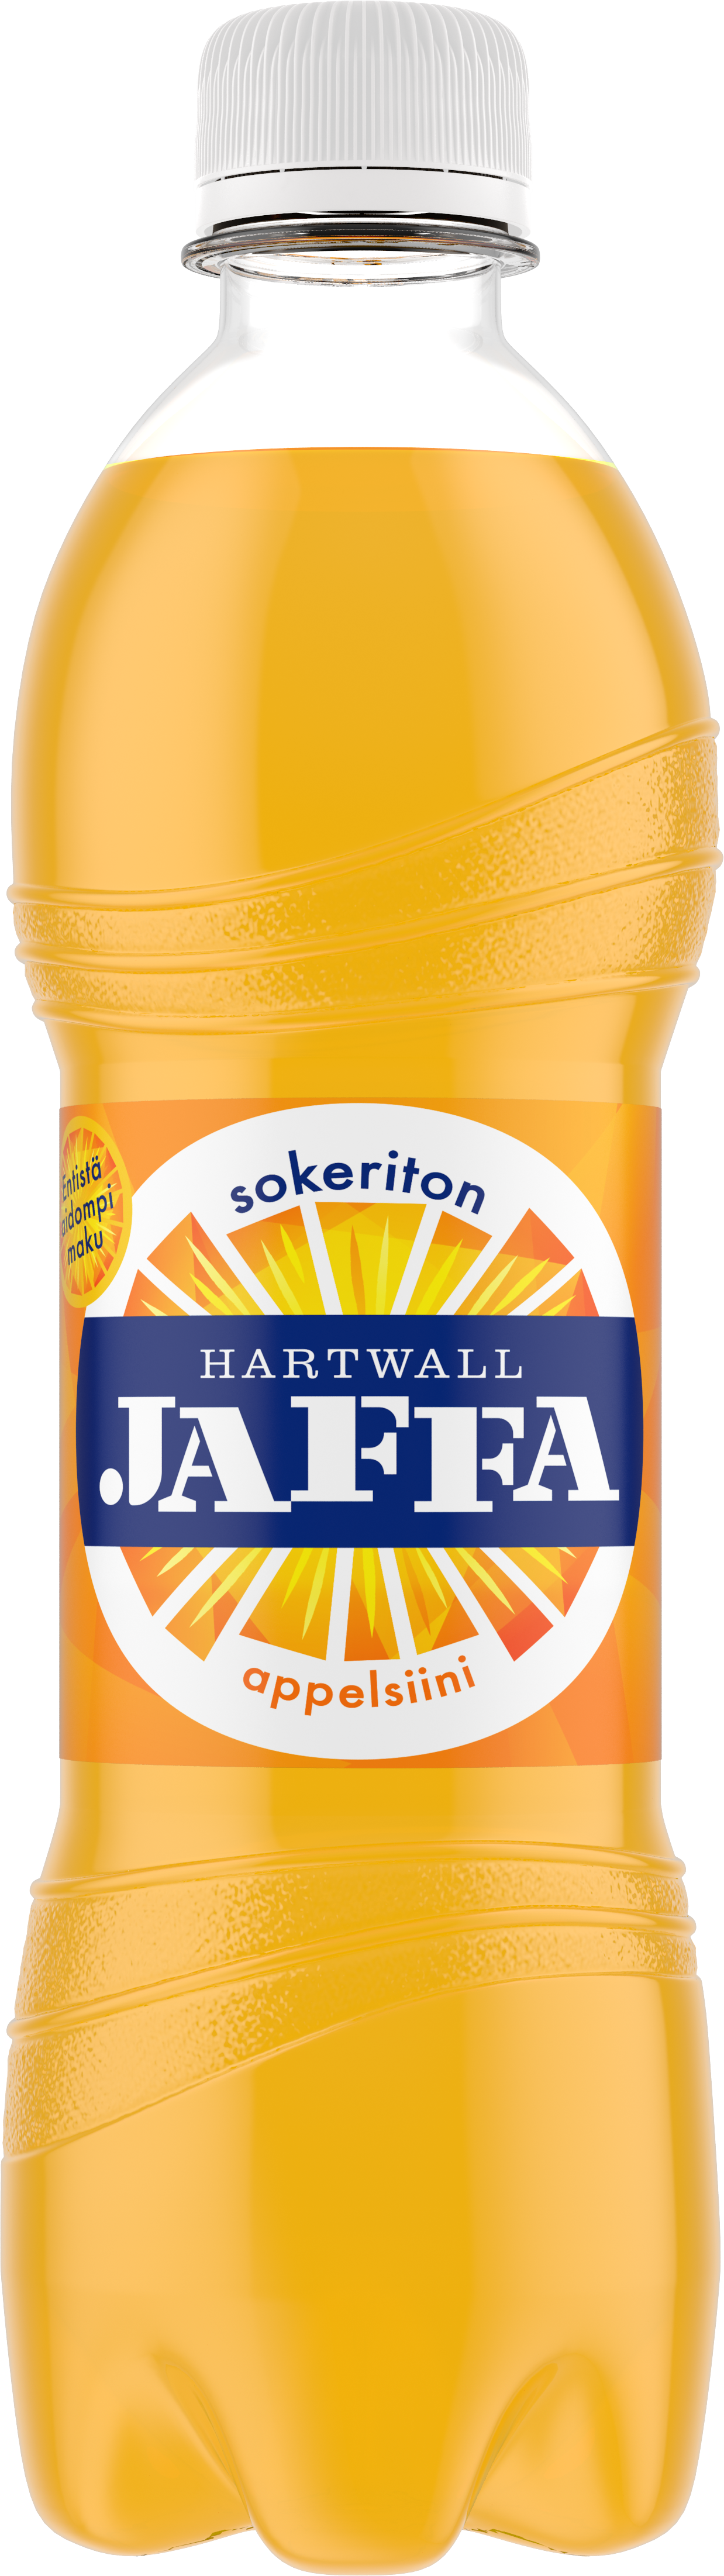 Hartwall Jaffa Appelsiini Sokeriton